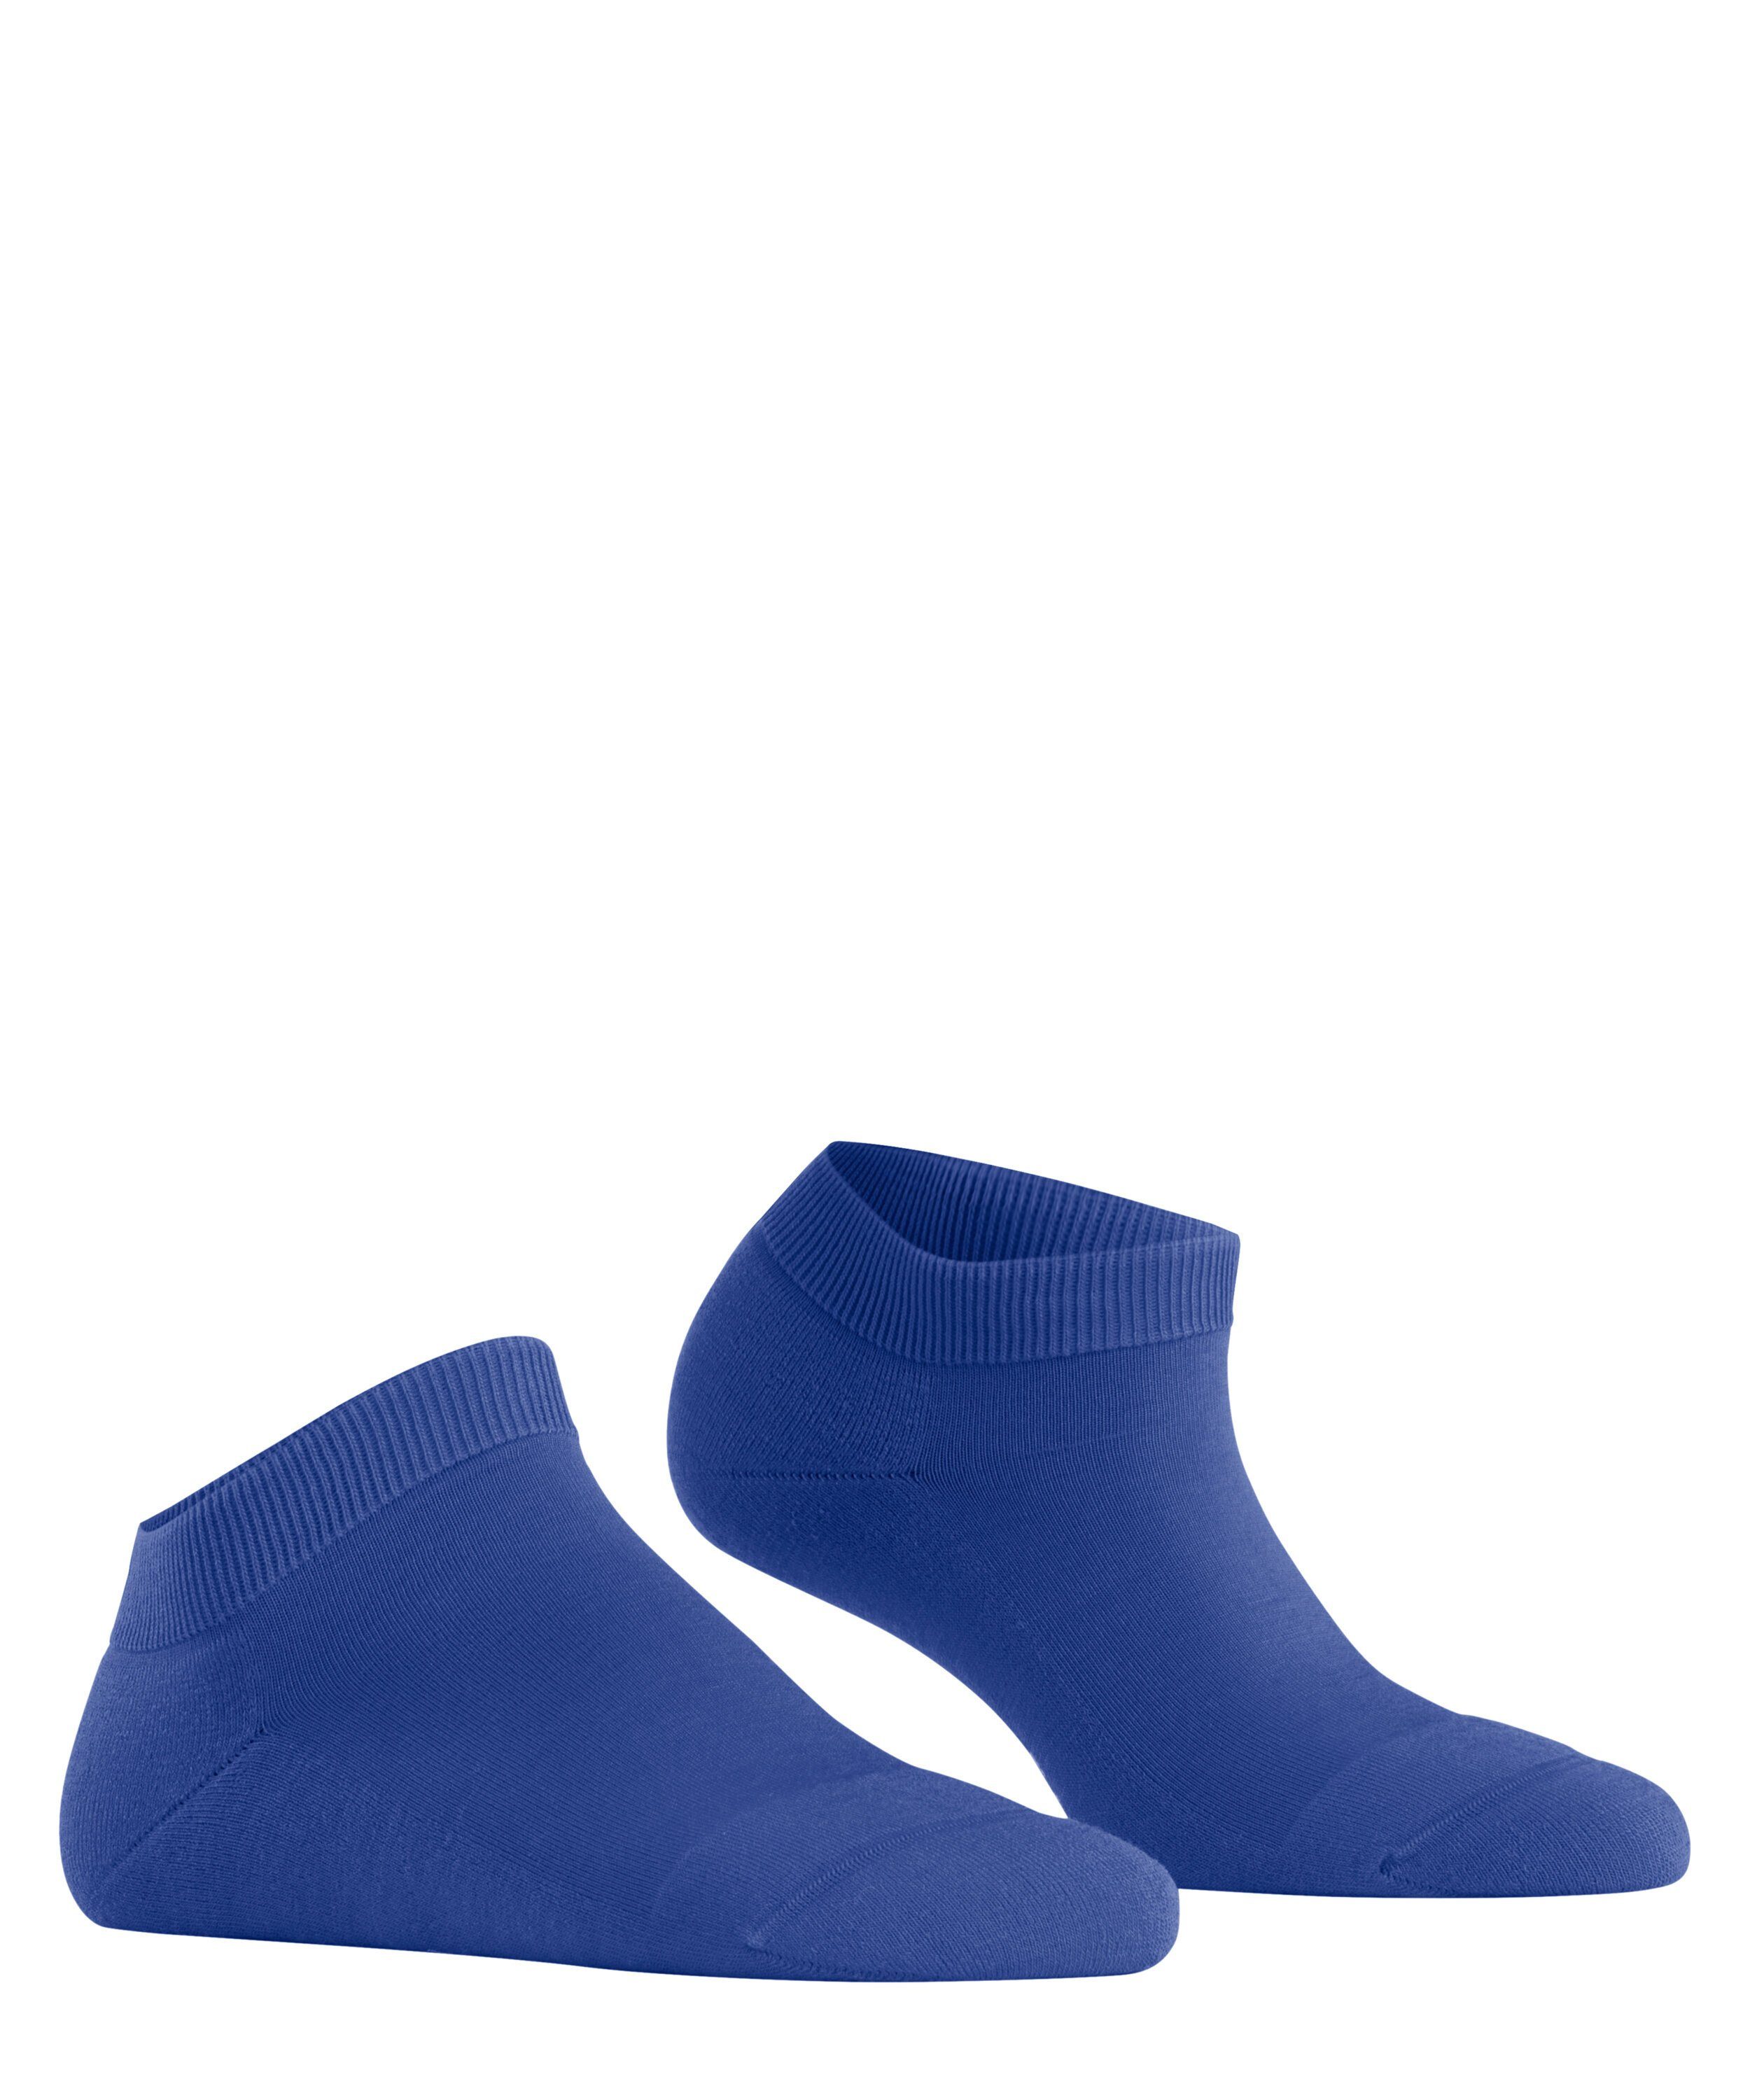 imperial (6065) Sneakersocken FALKE Wolle-Lyocell aus klimaregulierender (1-Paar) ClimaWool Mischung